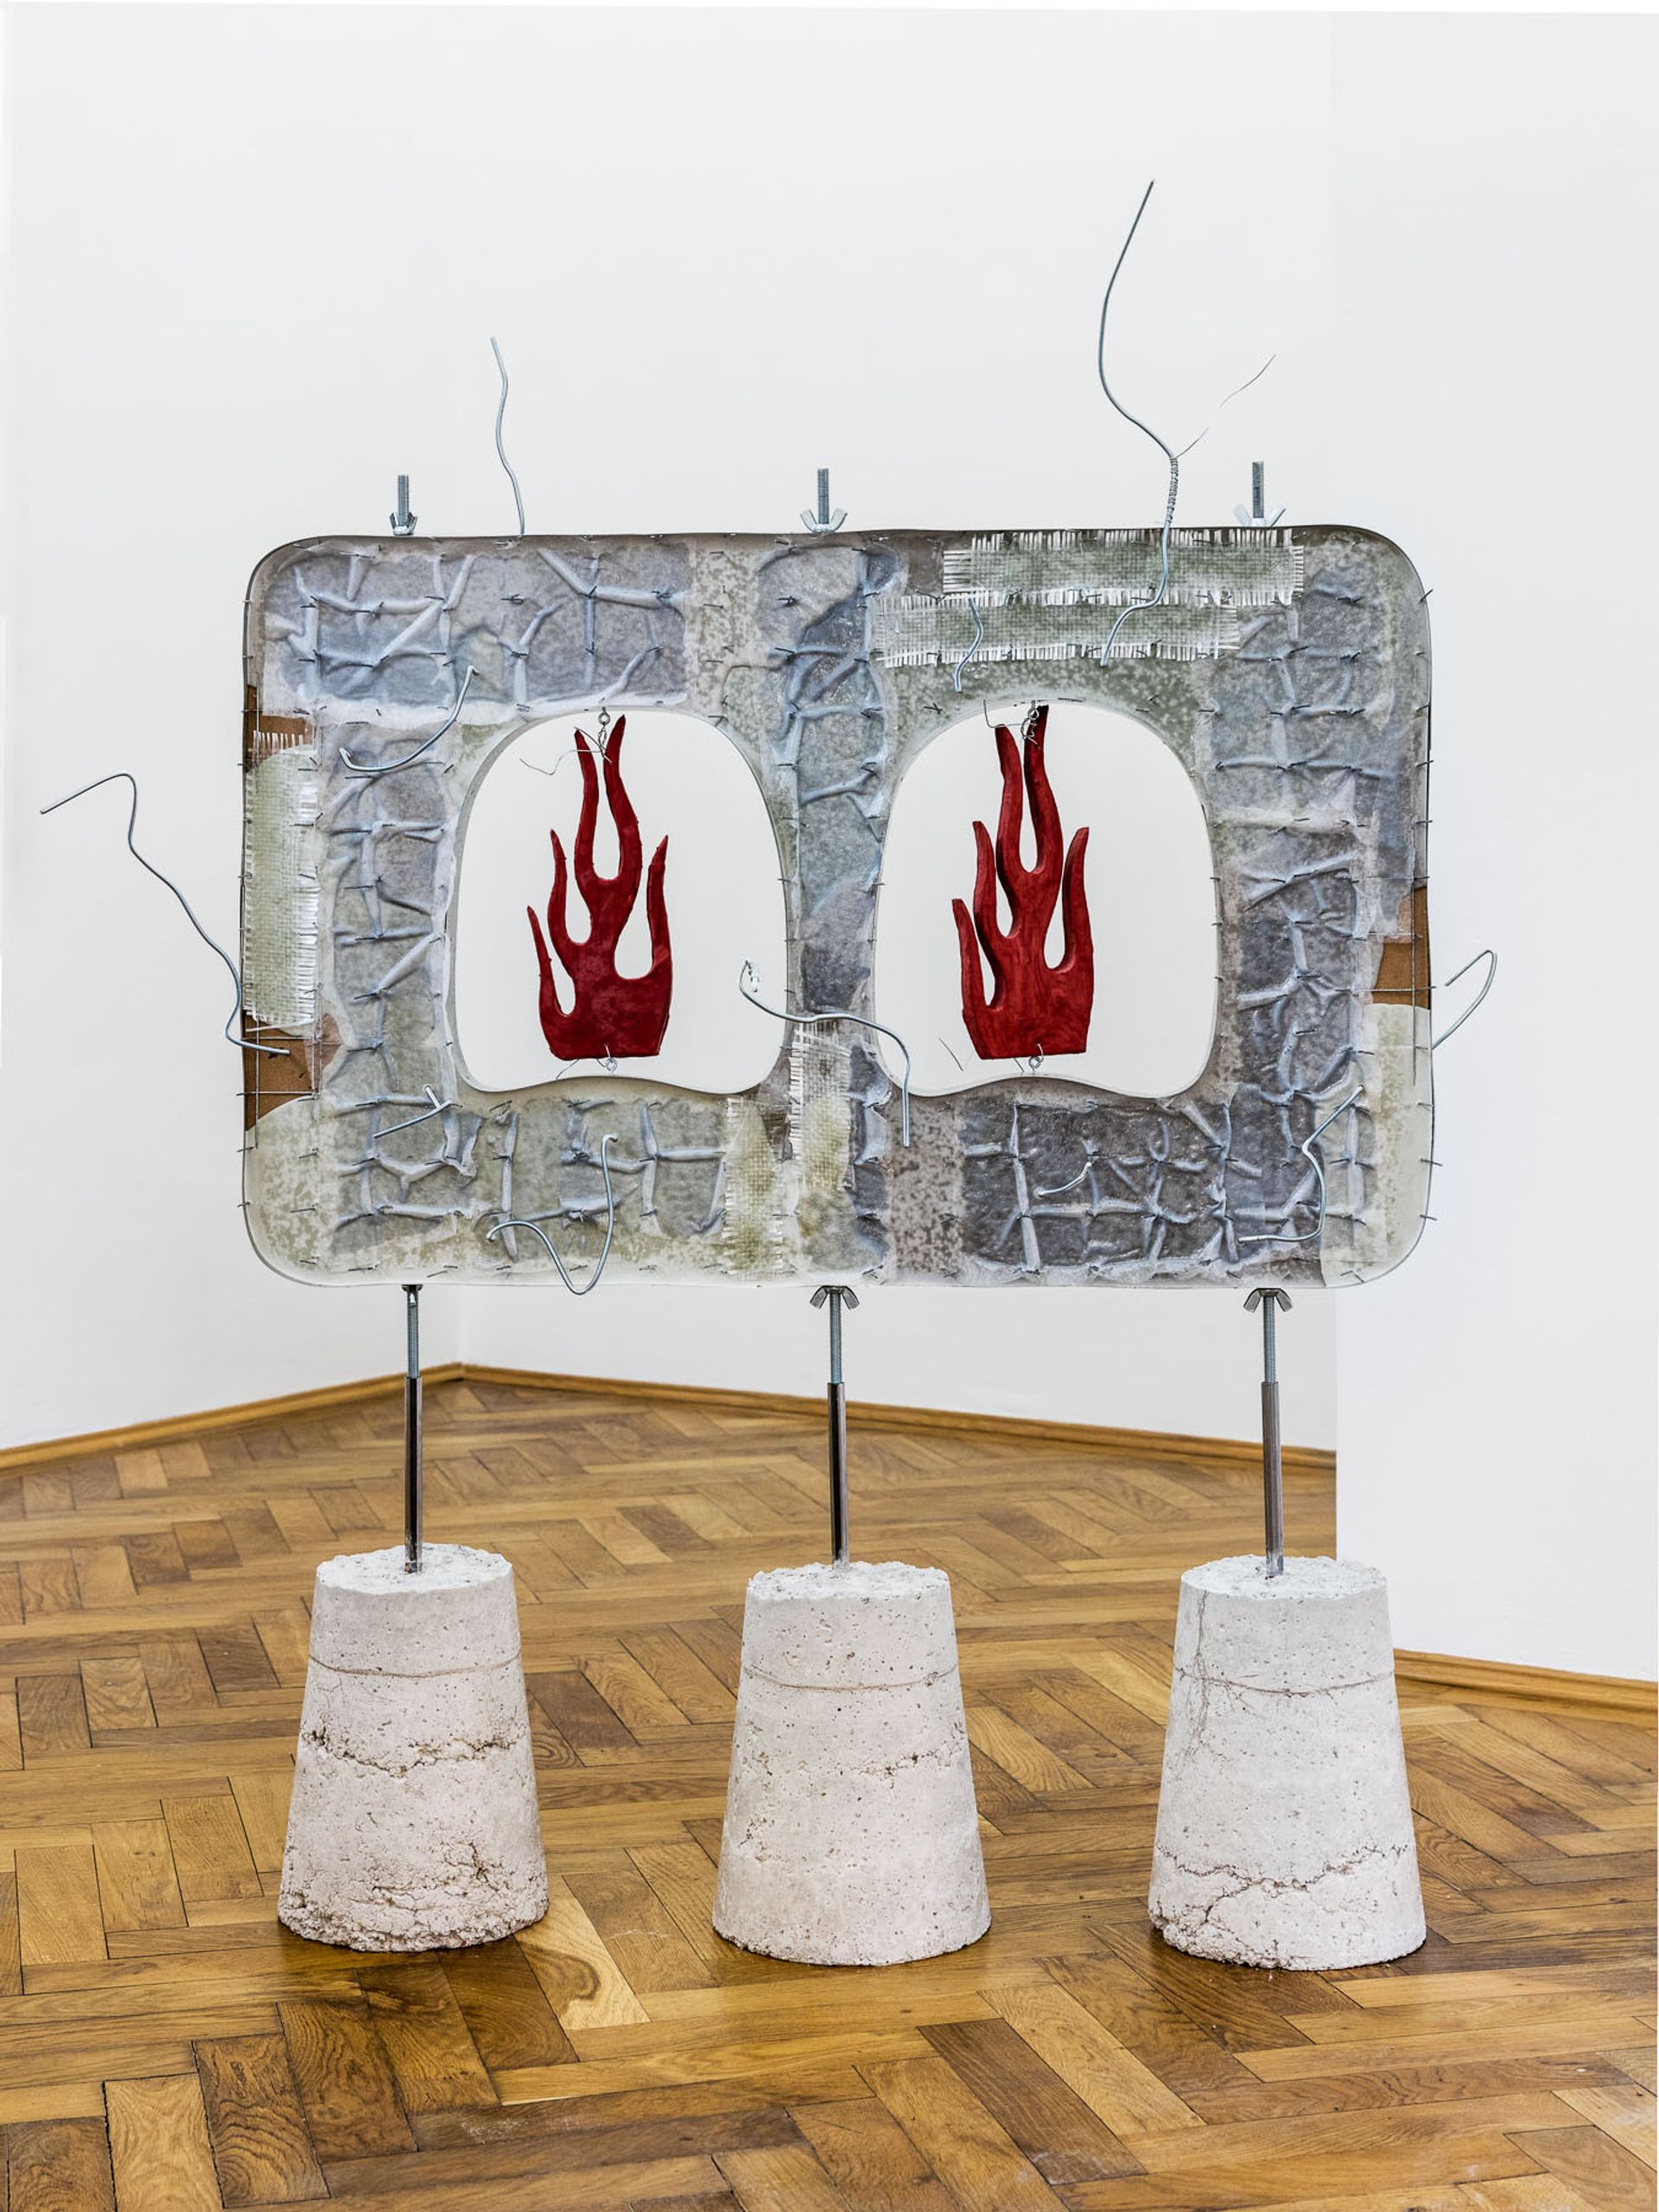 Stefan Fuchs, Something hot, 2017, Mixed media, 151 × 137 × 70 cm